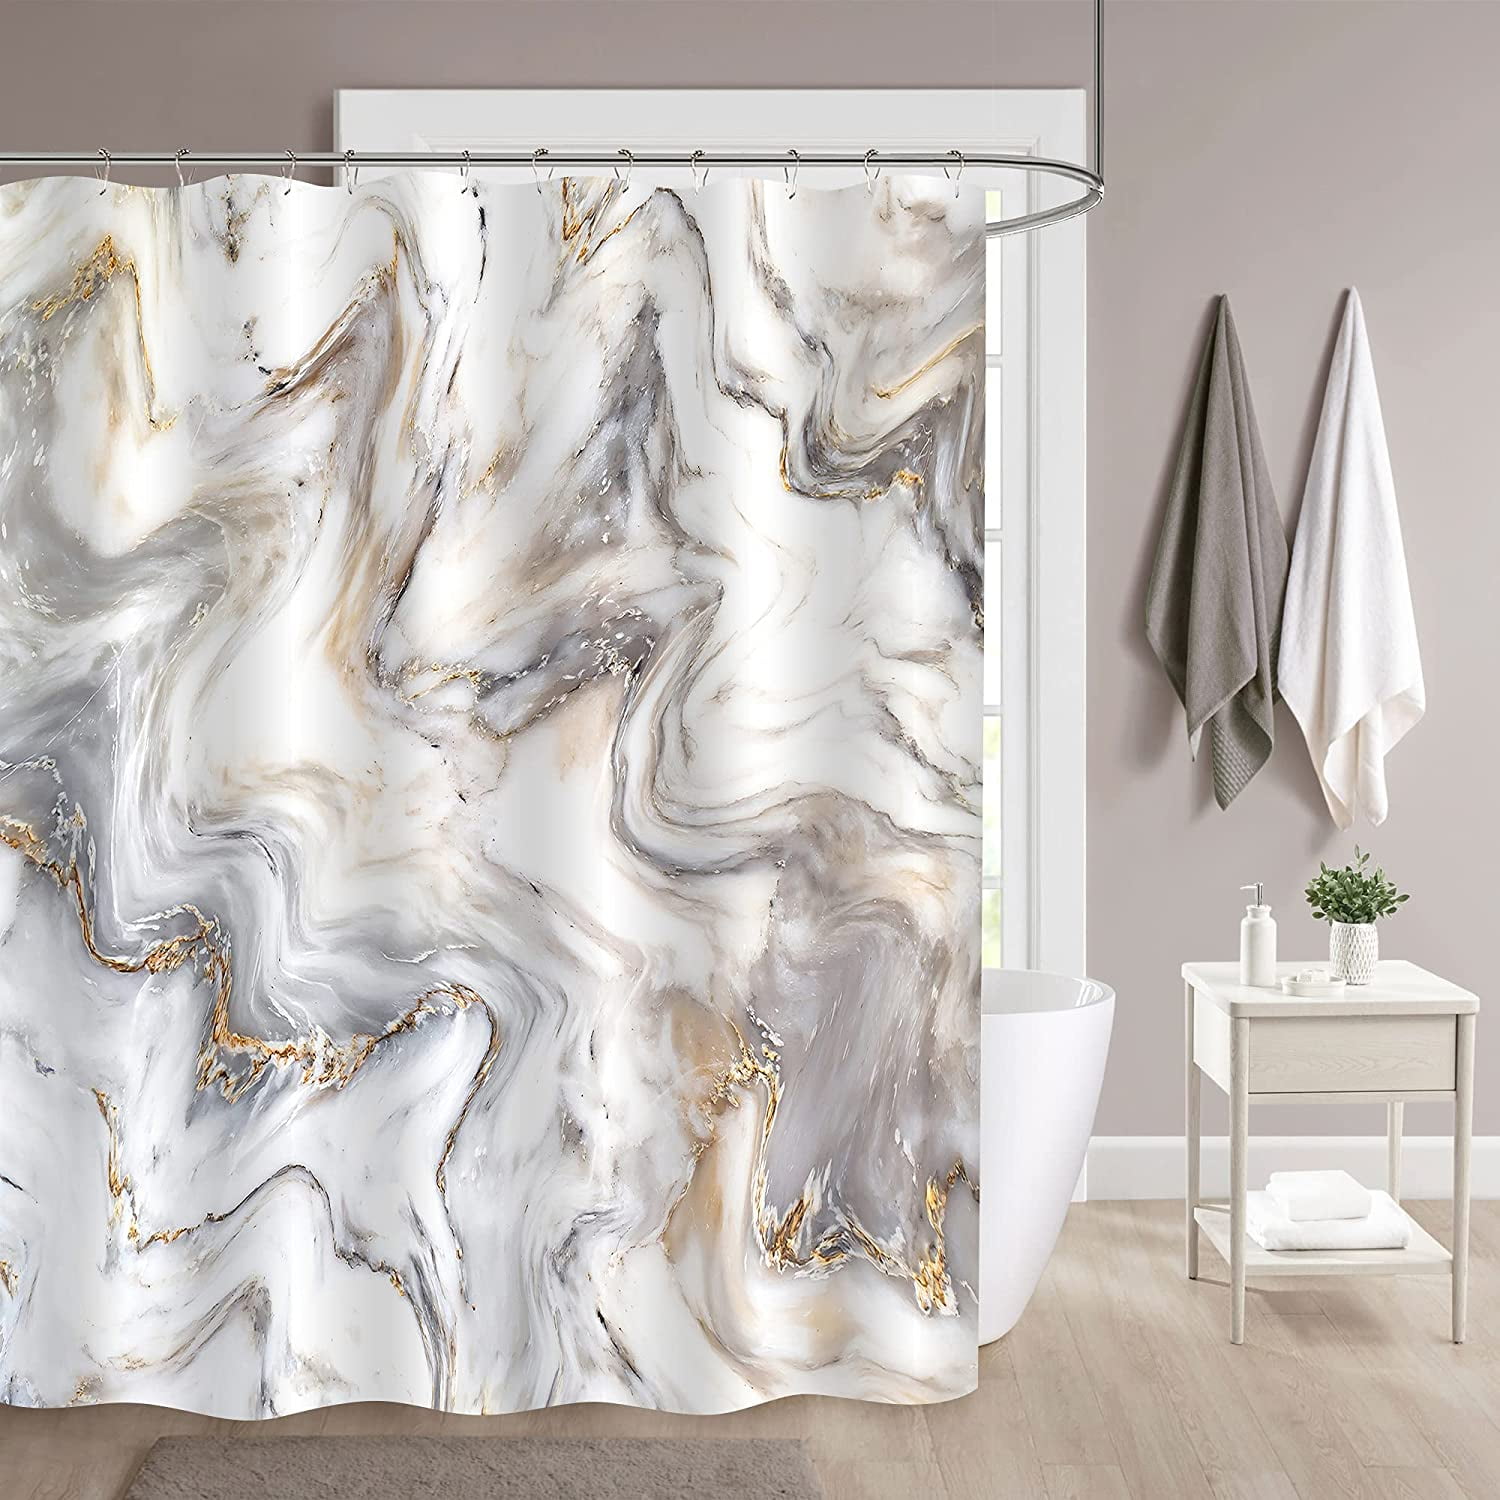 Rustic Dark Background Marble Texture Bath Waterproof Fabric Shower Curtain Set 